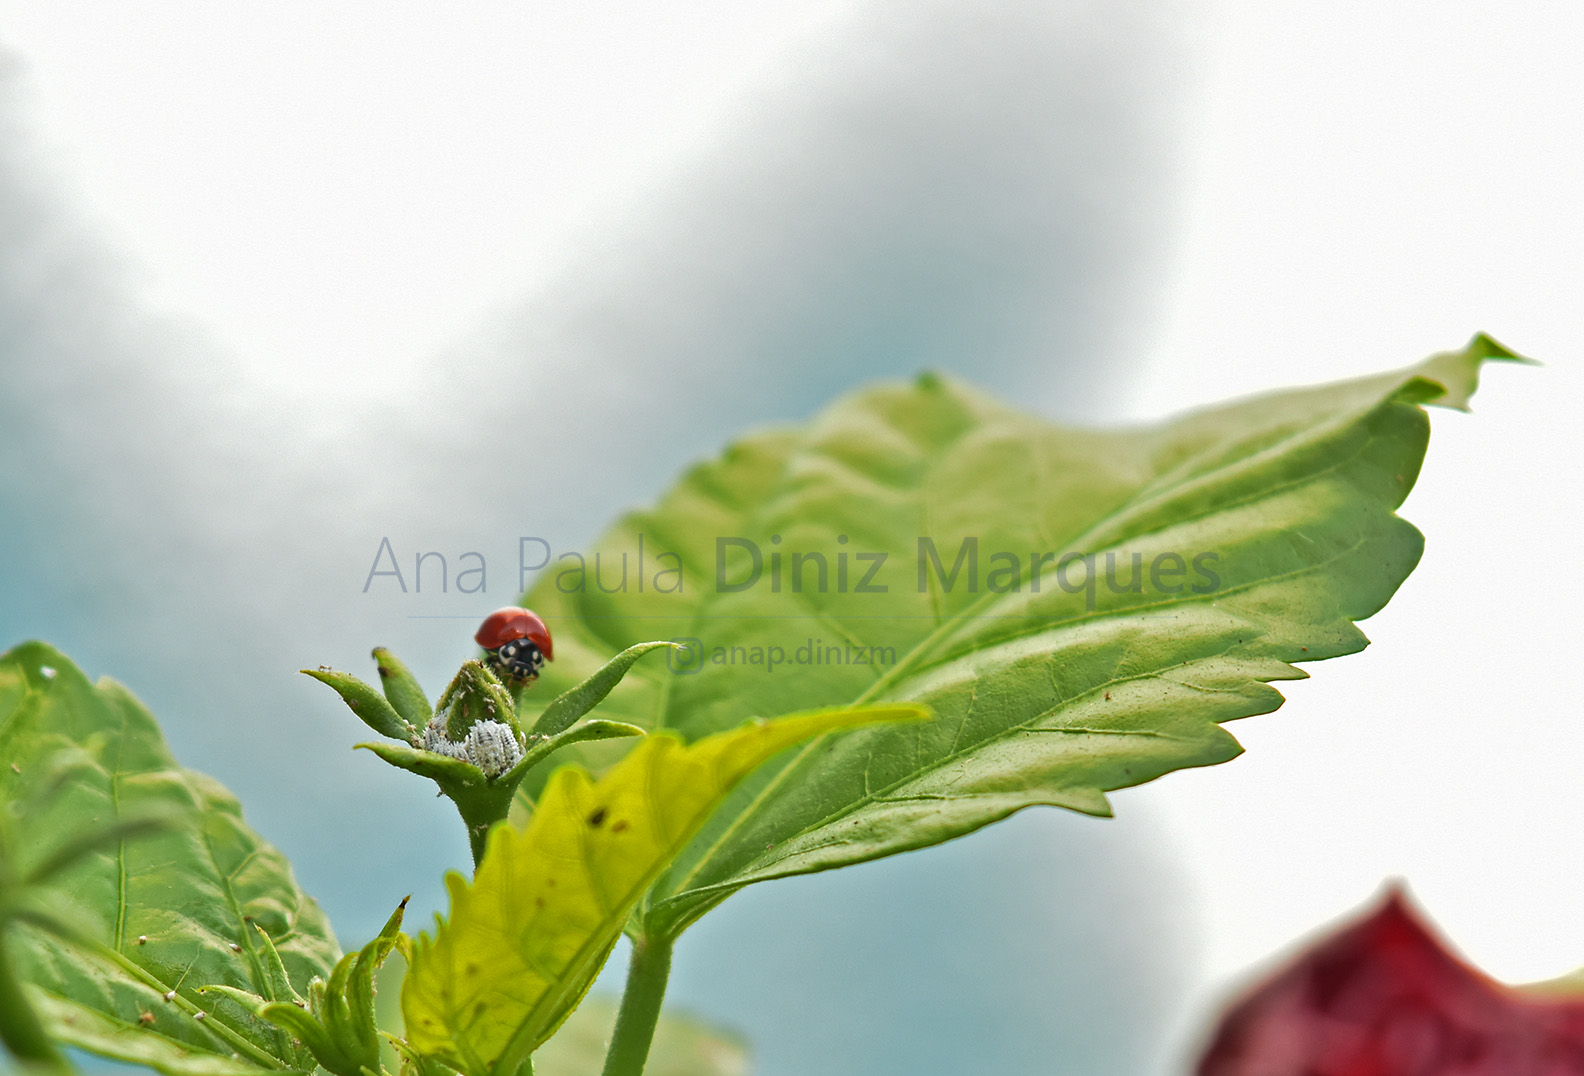 Meally bugs and Lady bug: Macro Photography